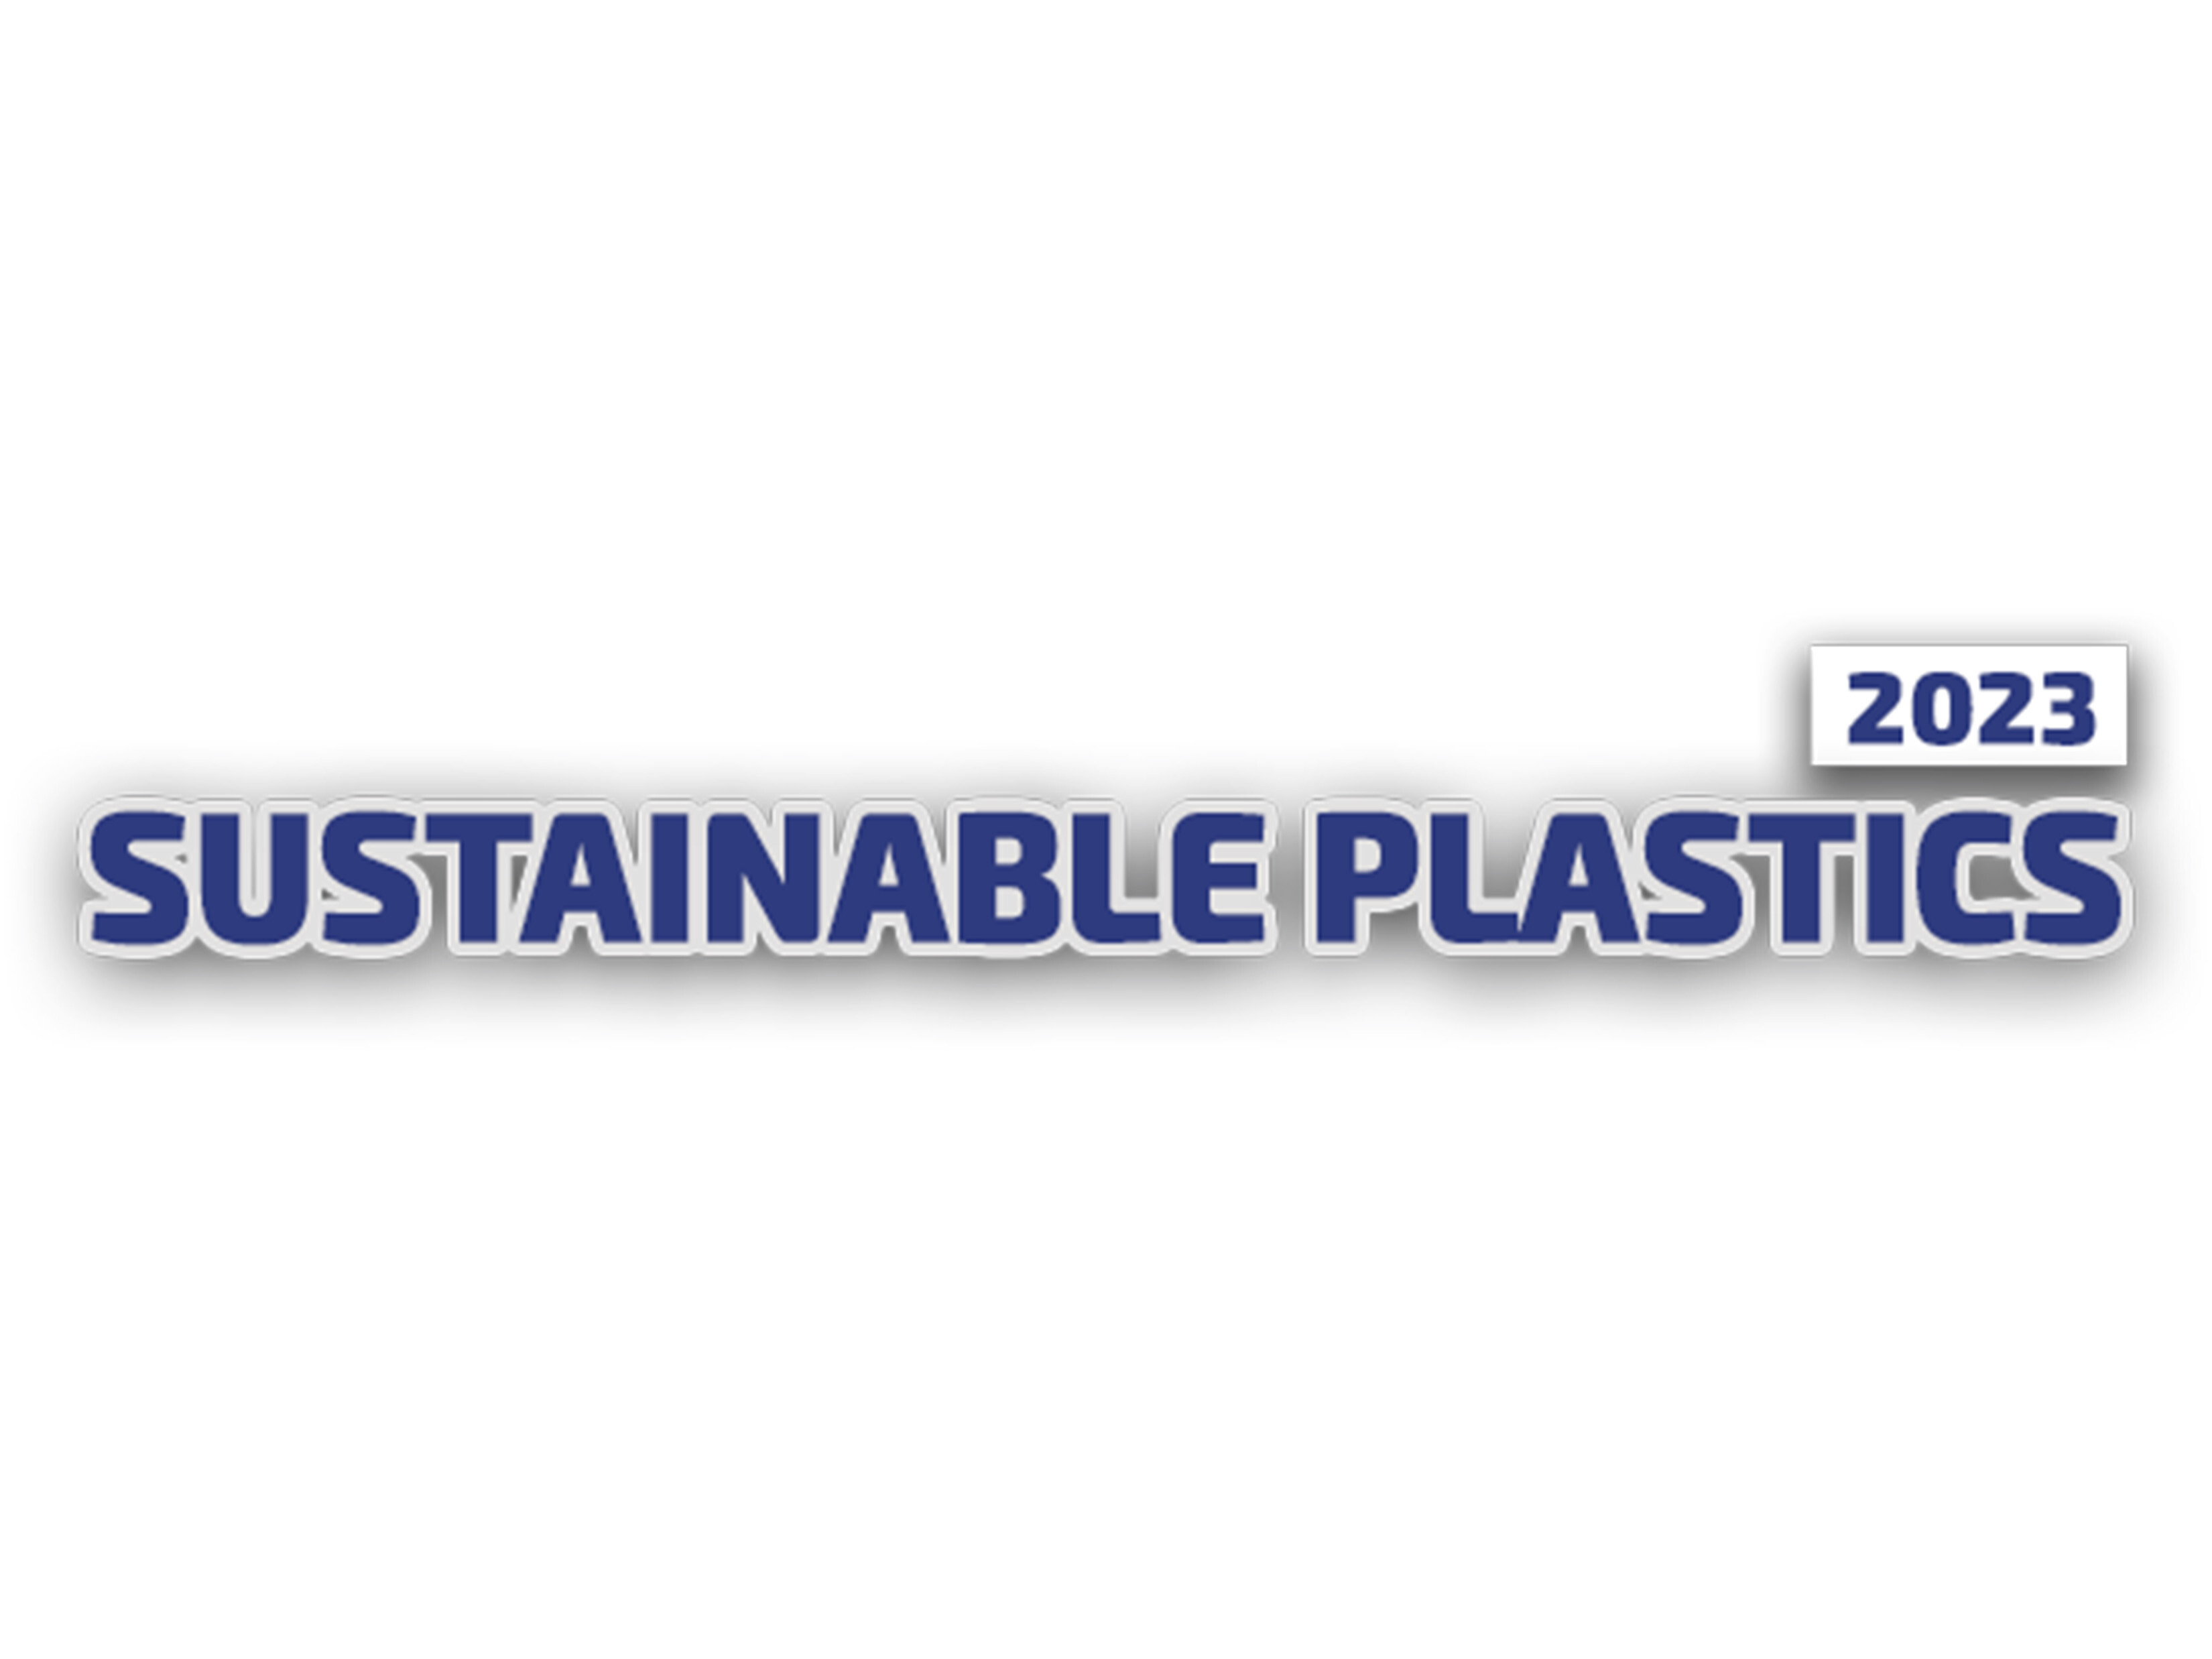 2023-sustainable-plastics-show-logo-4x3.jpg